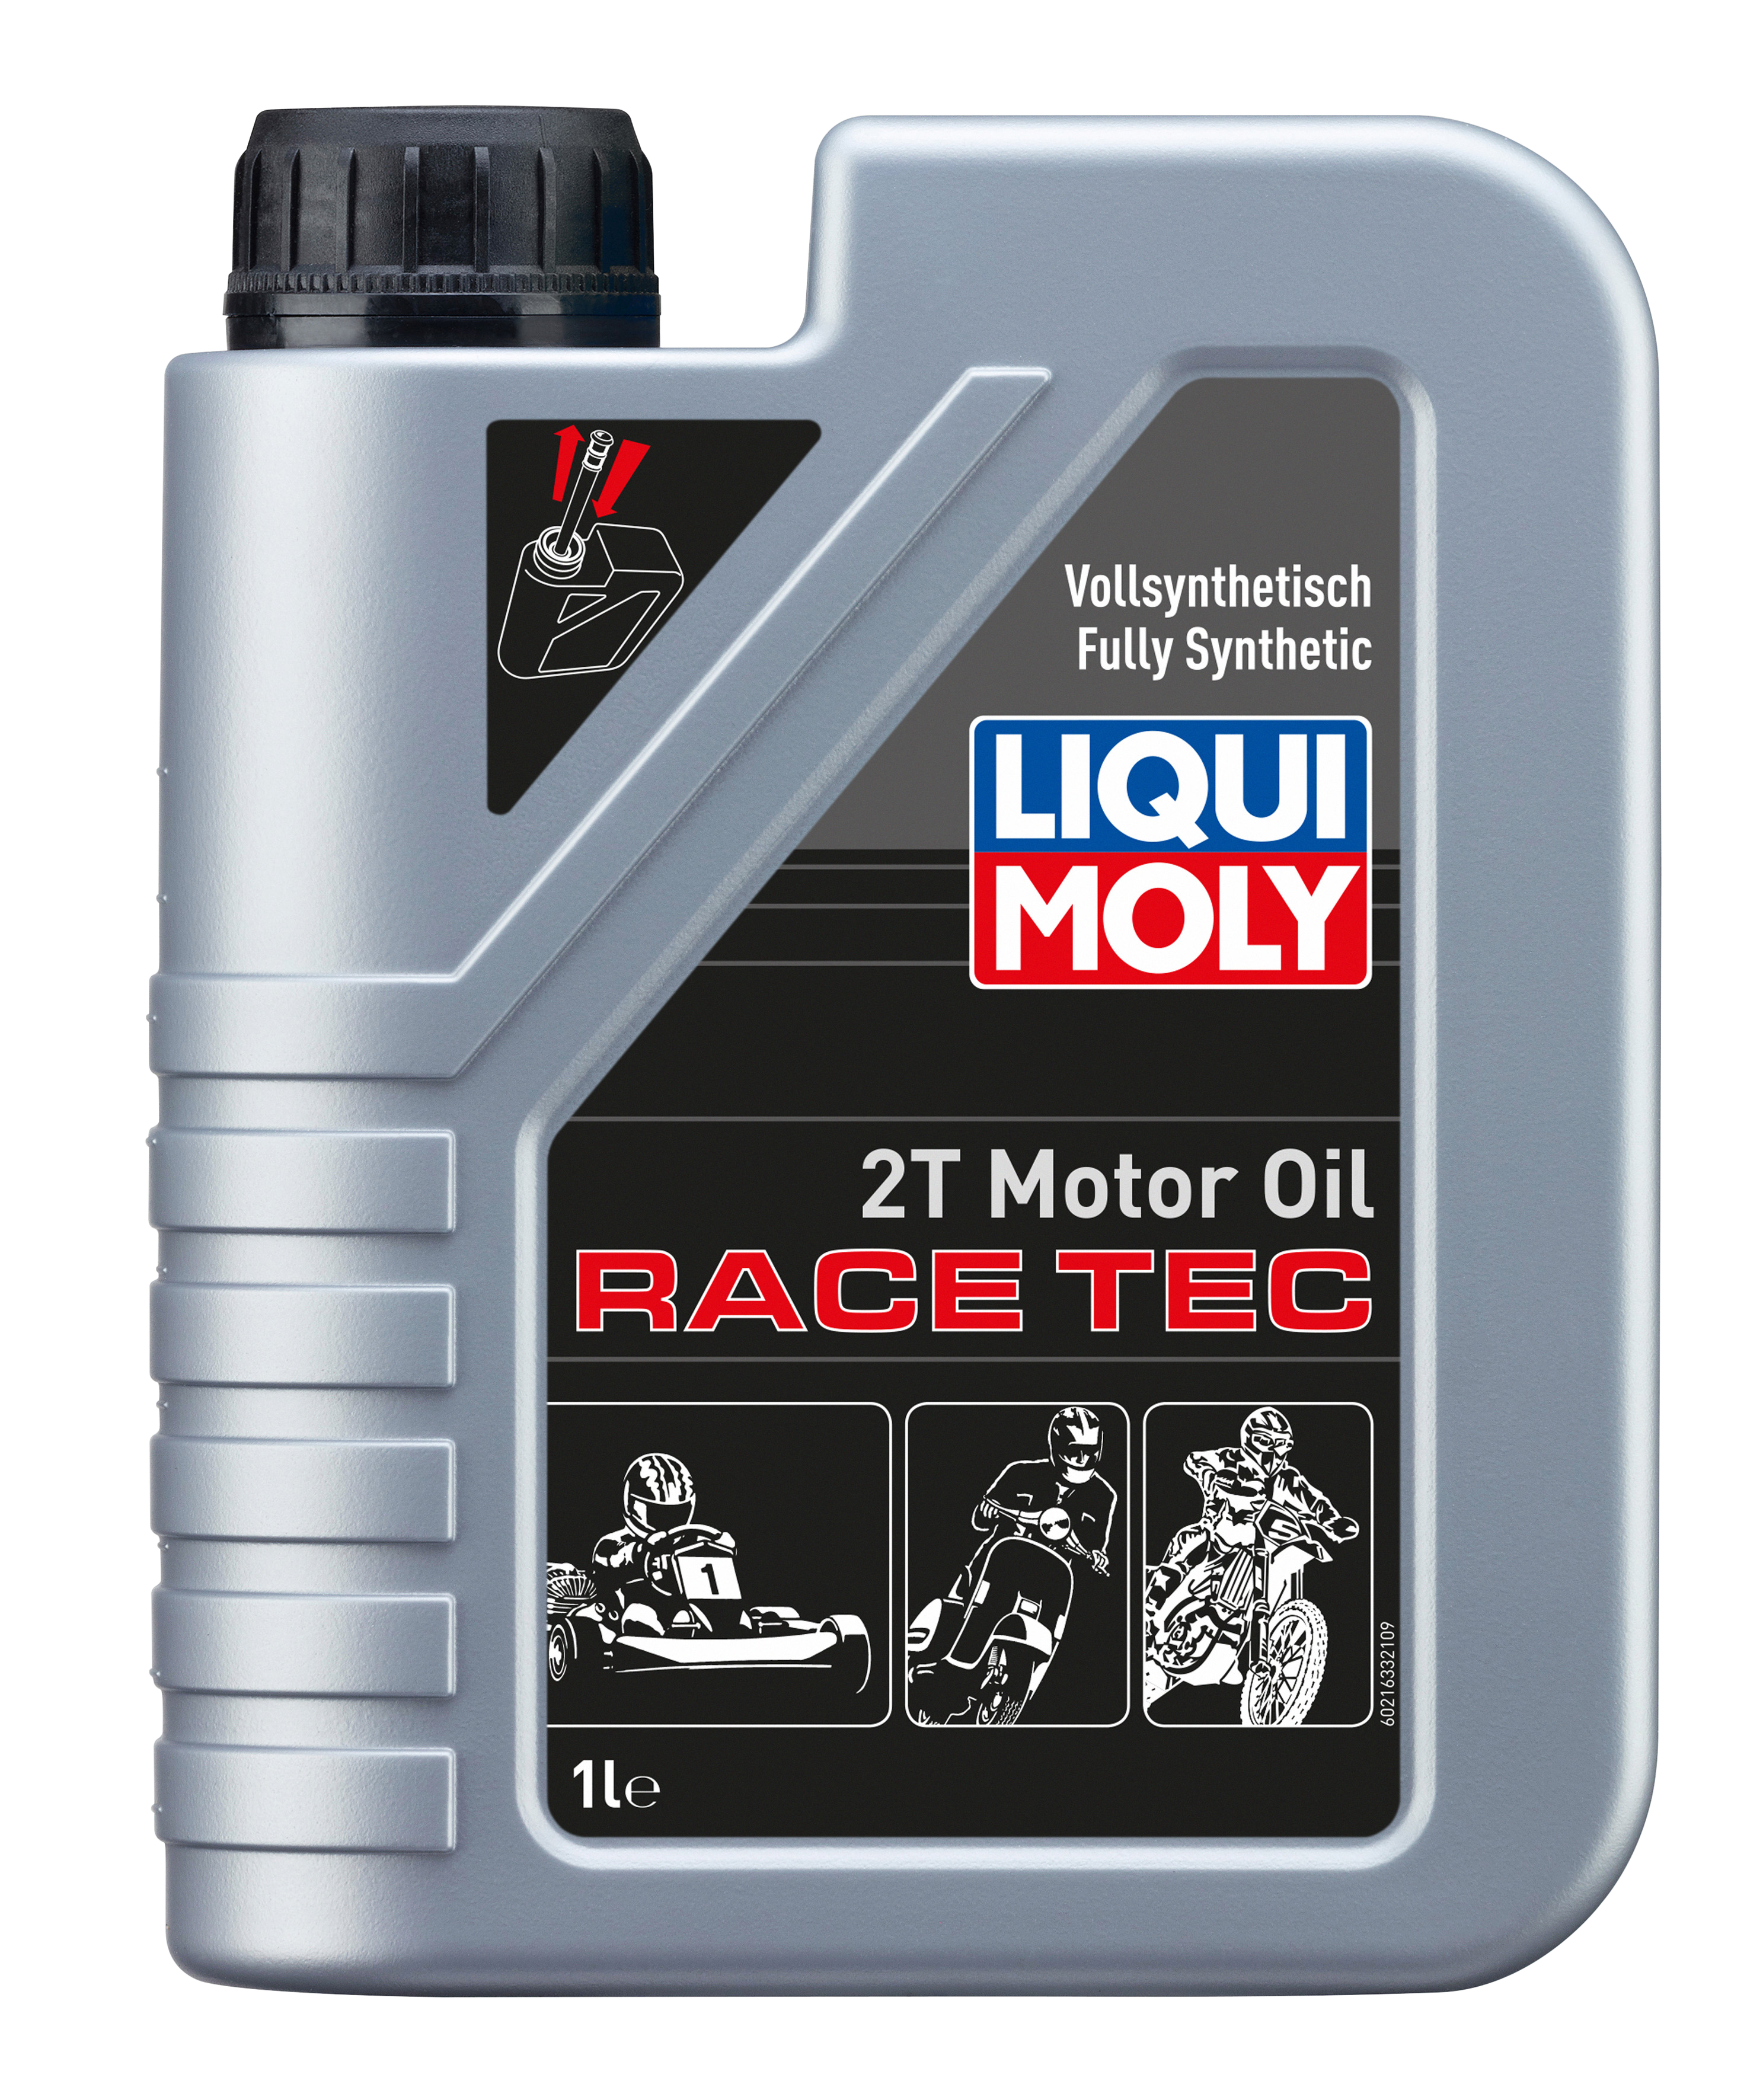 Liqui Moly develops oil for kart racing